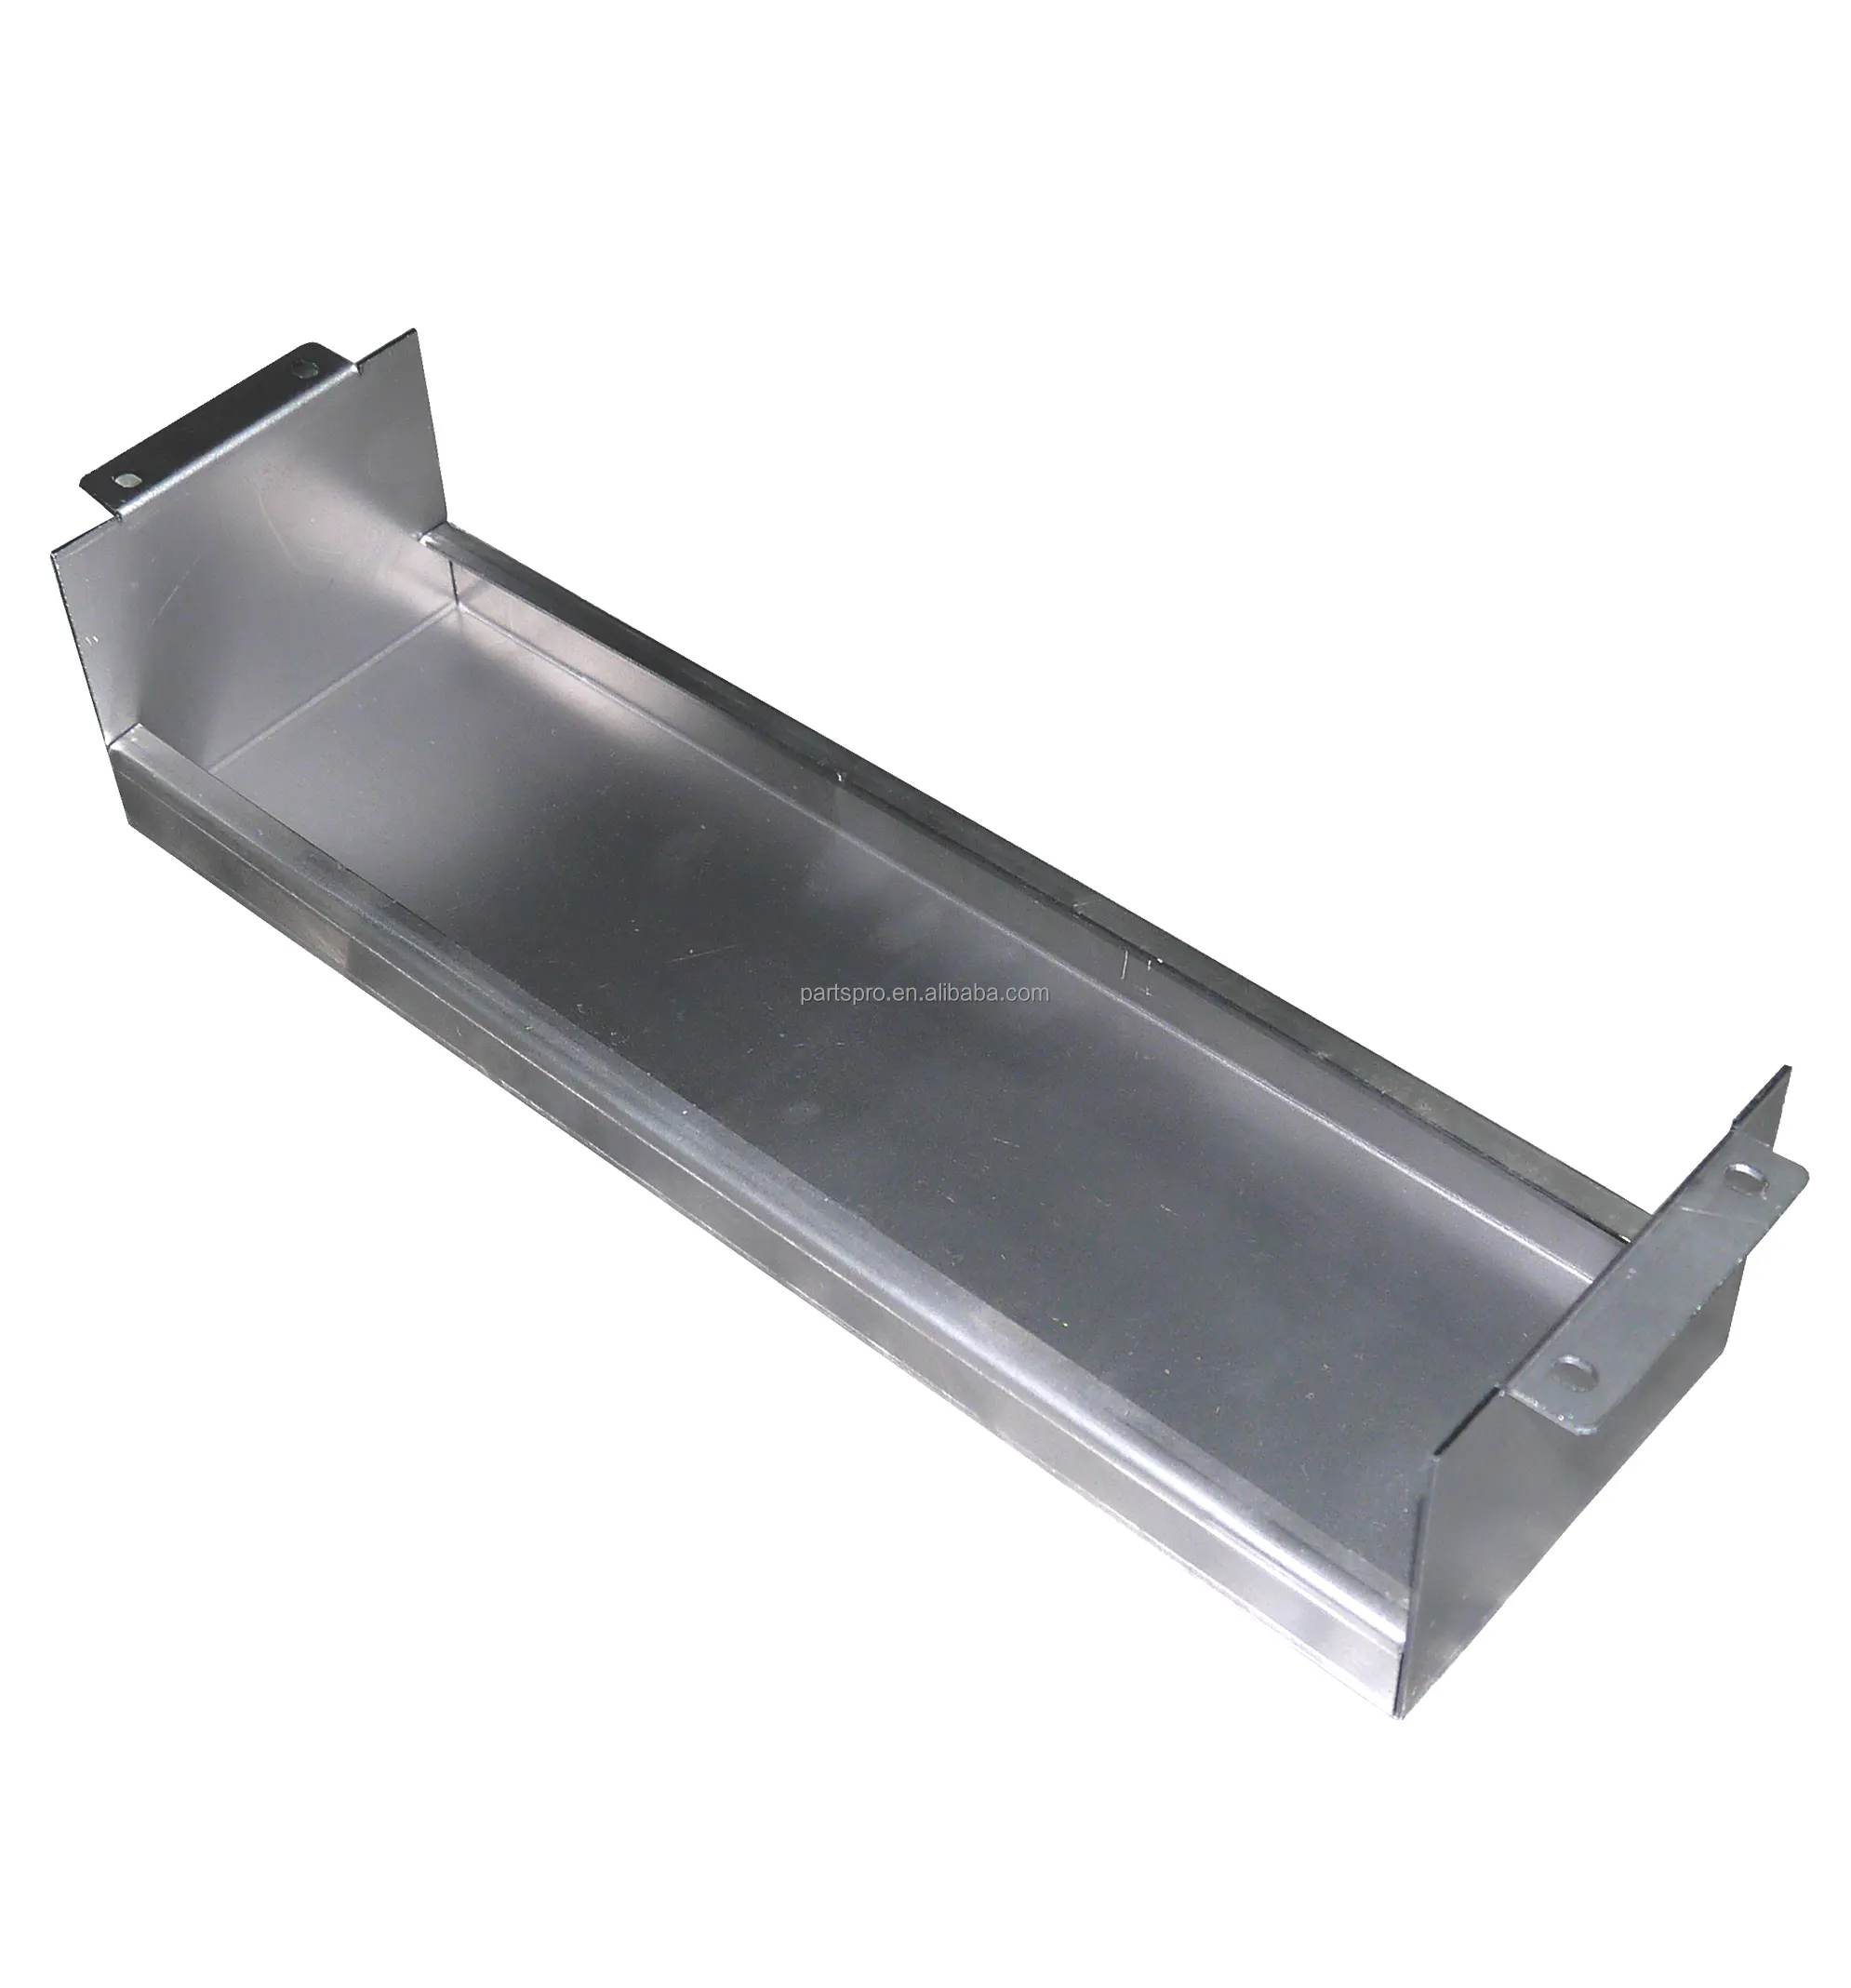 Metal işleme çelik levha metal kesme parçaları hizmet paslanmaz çelik levha metal kesme parçaları hassas kaynak CNC bükme